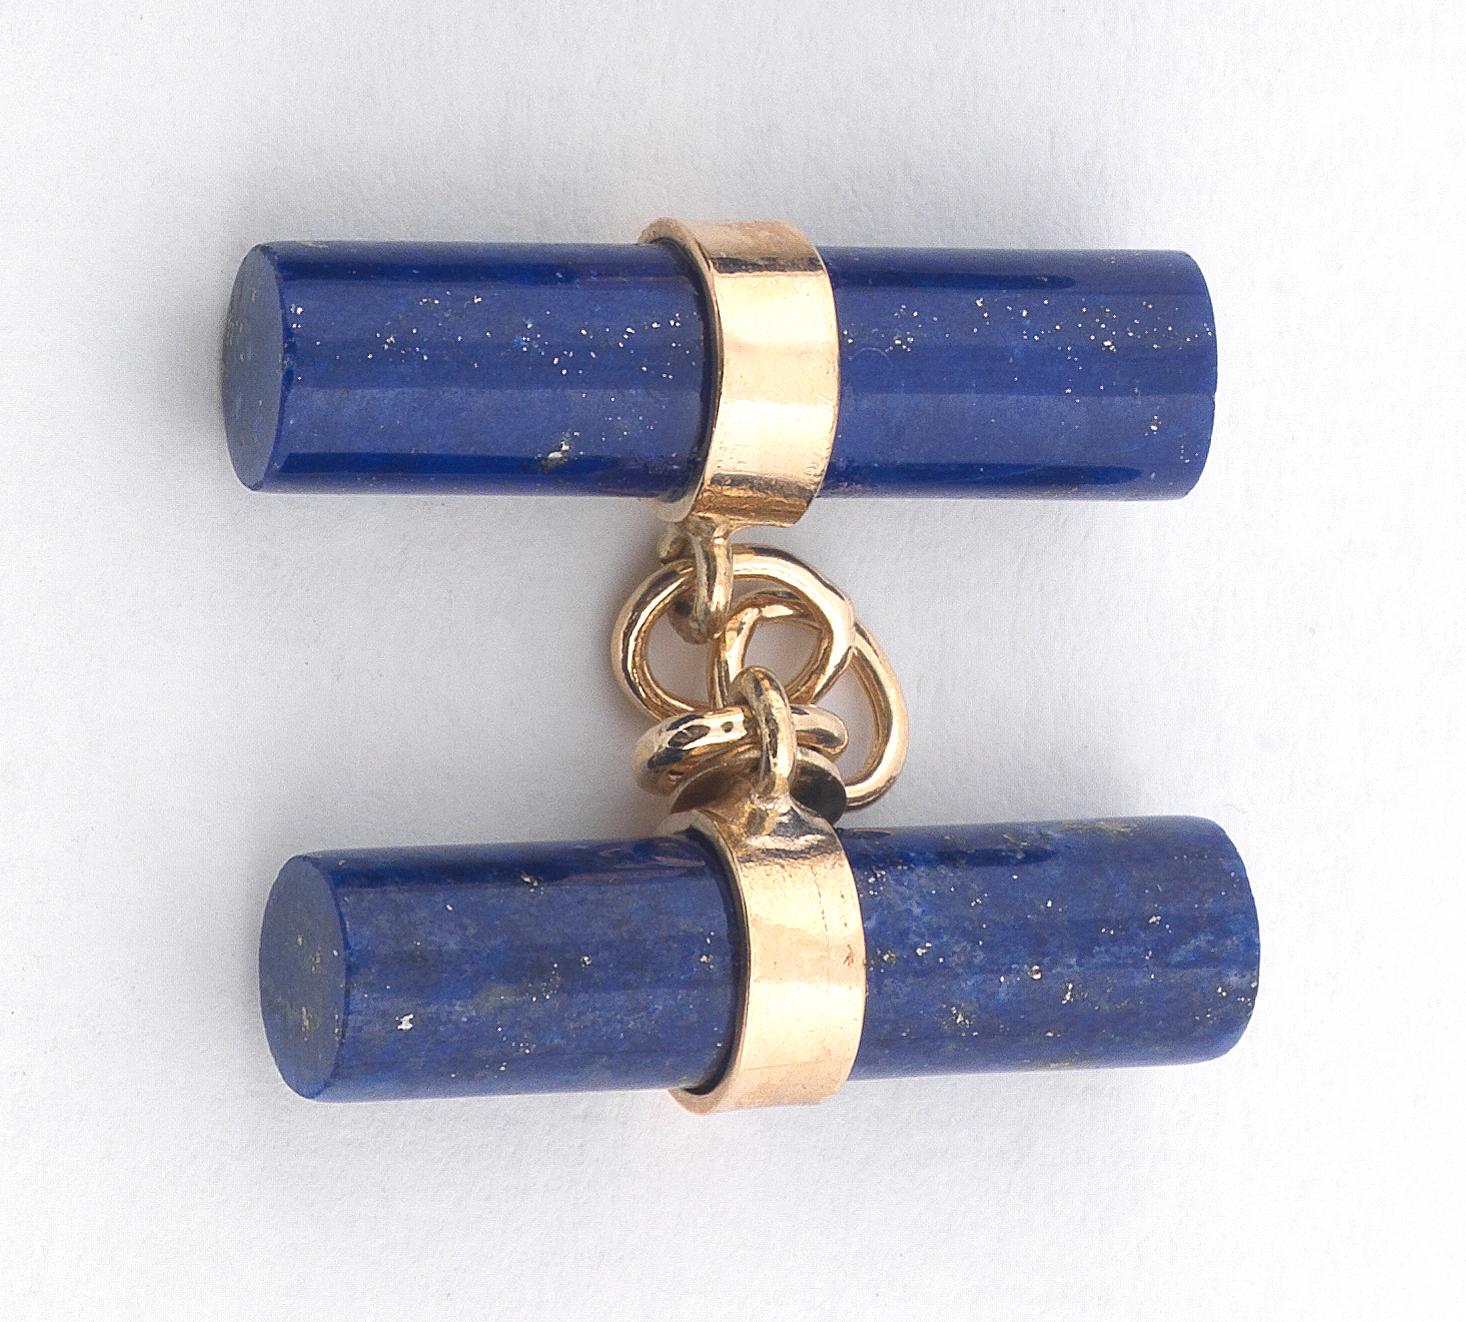 BERNARDO ANTICHITÀ PONTE VECCHIO FLORENCE
Designed with lapis lazuli baton terminals, to belcher-link chain fittings,length of the baton 2cm.